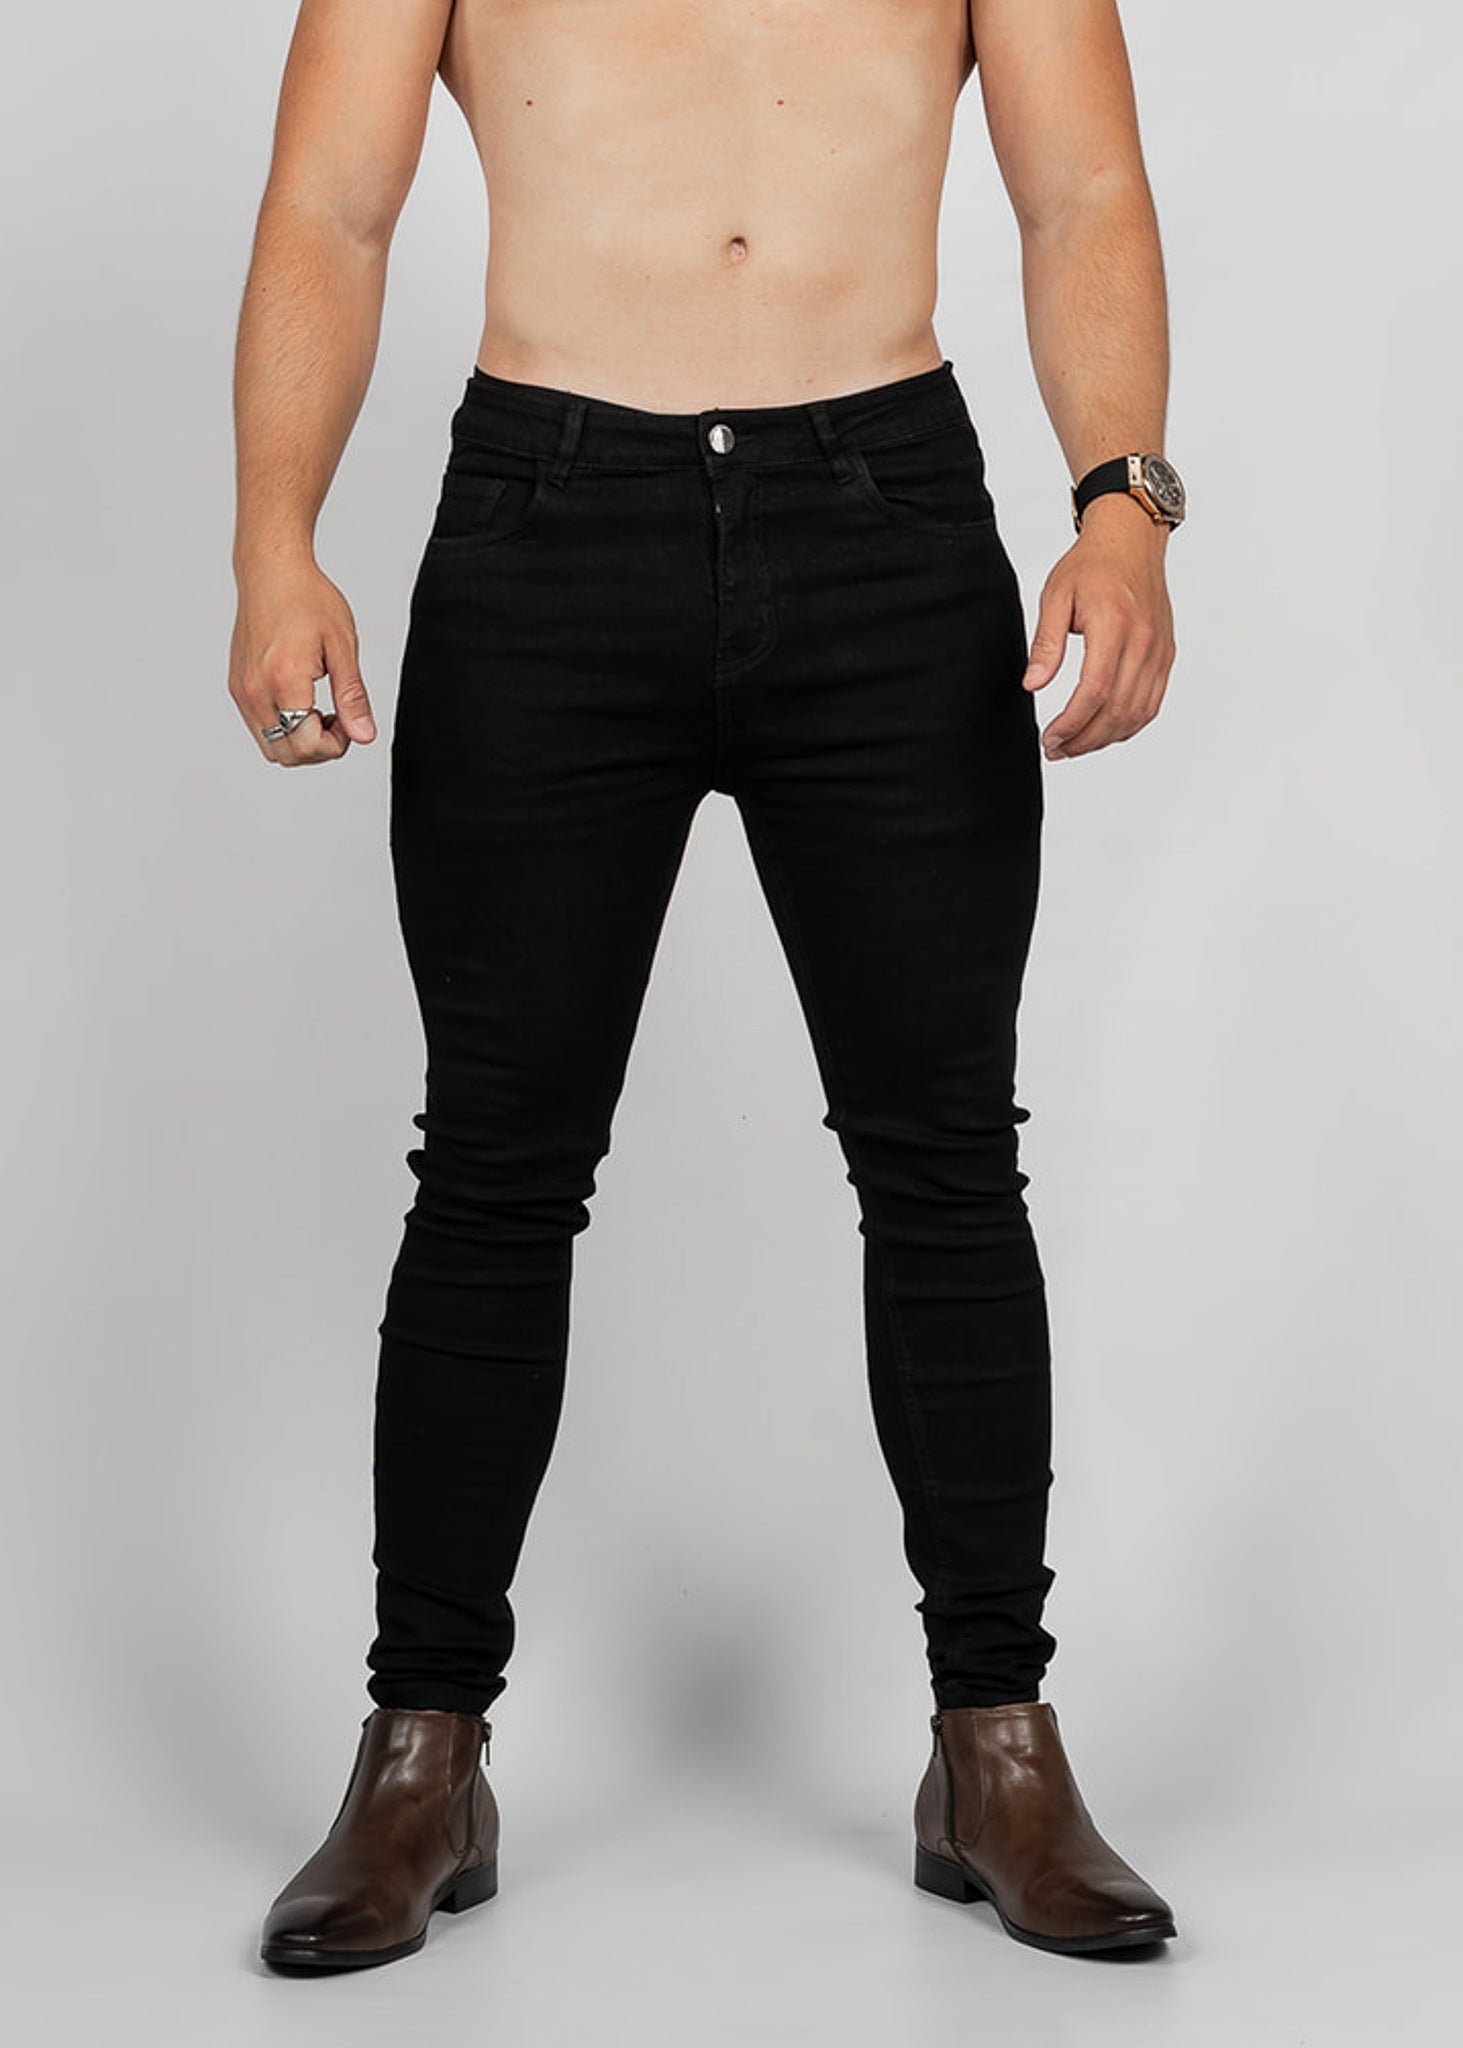 KCC Men's Premium Ultra Stretch Jeans In Carbon Black